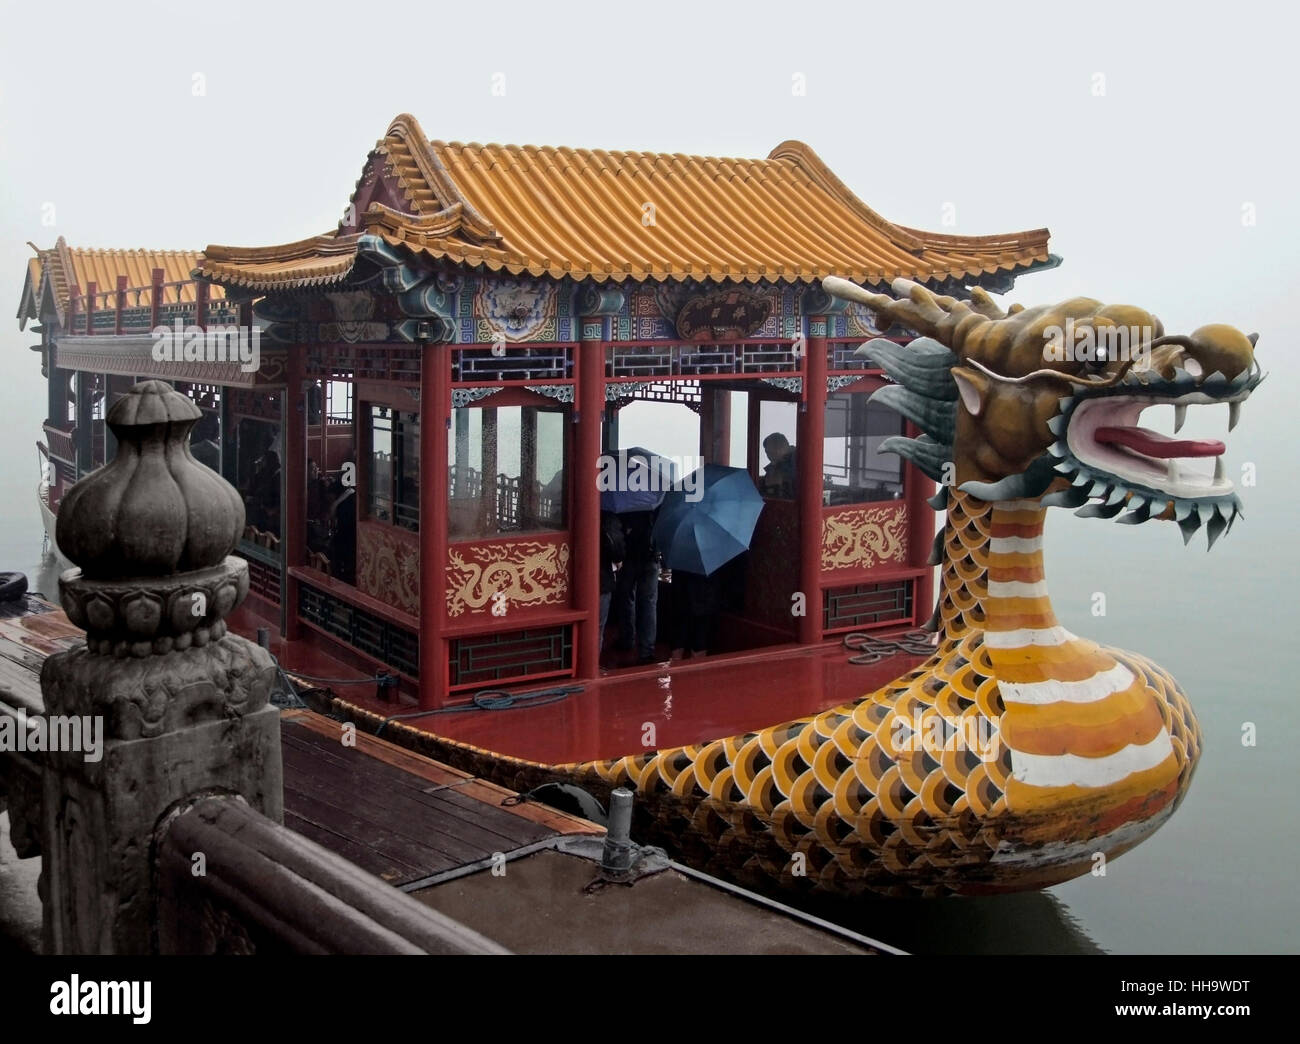 rainy scenery including a dragon-styled boat near Beijing in China Stock Photo